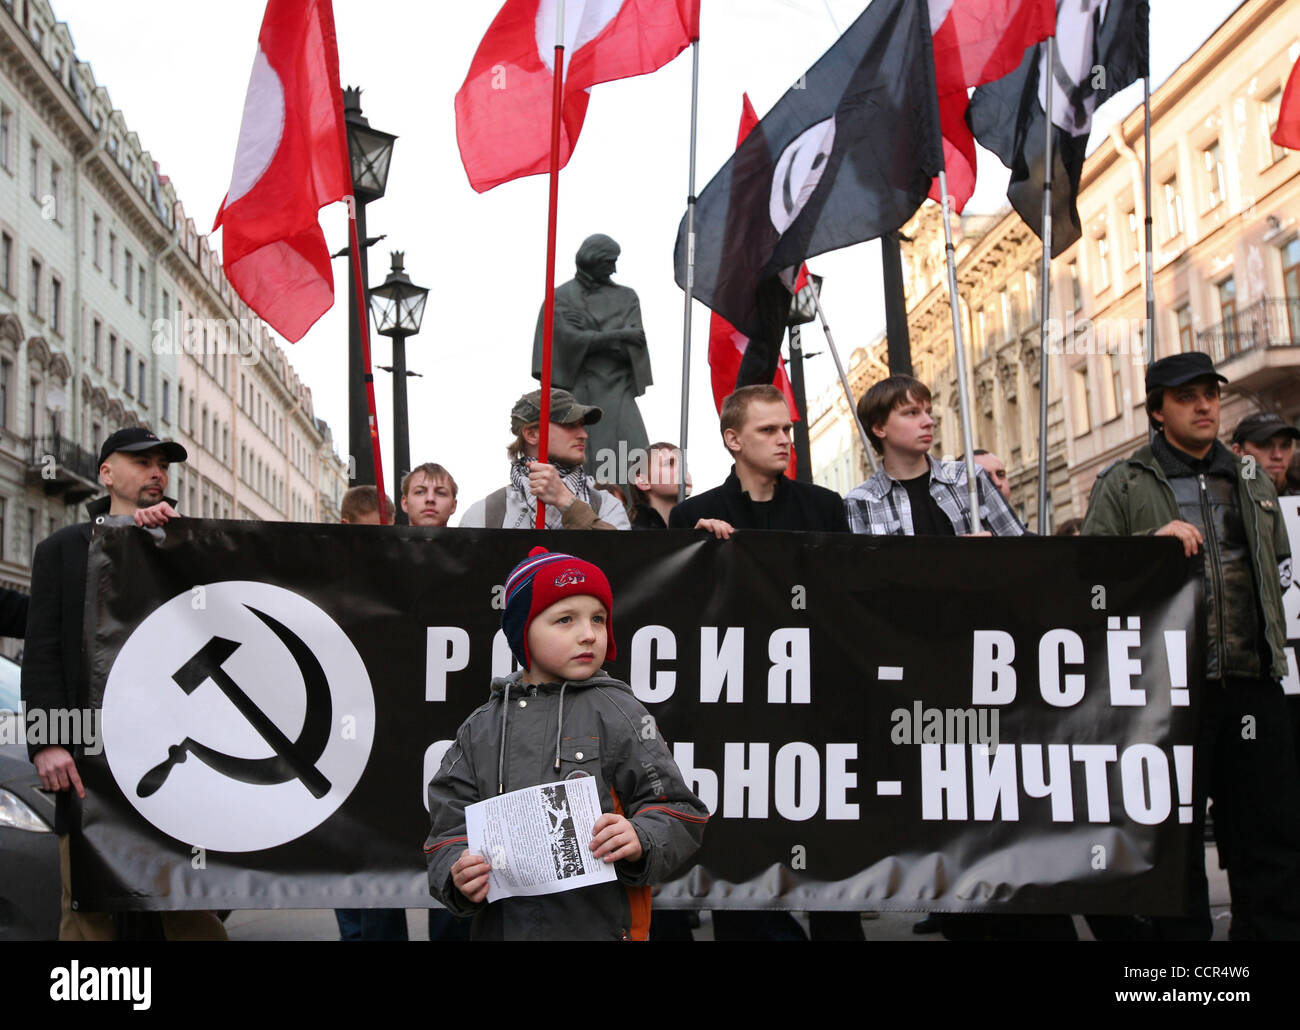  National Bolshevik Party Flag 3' x 5' for a pole